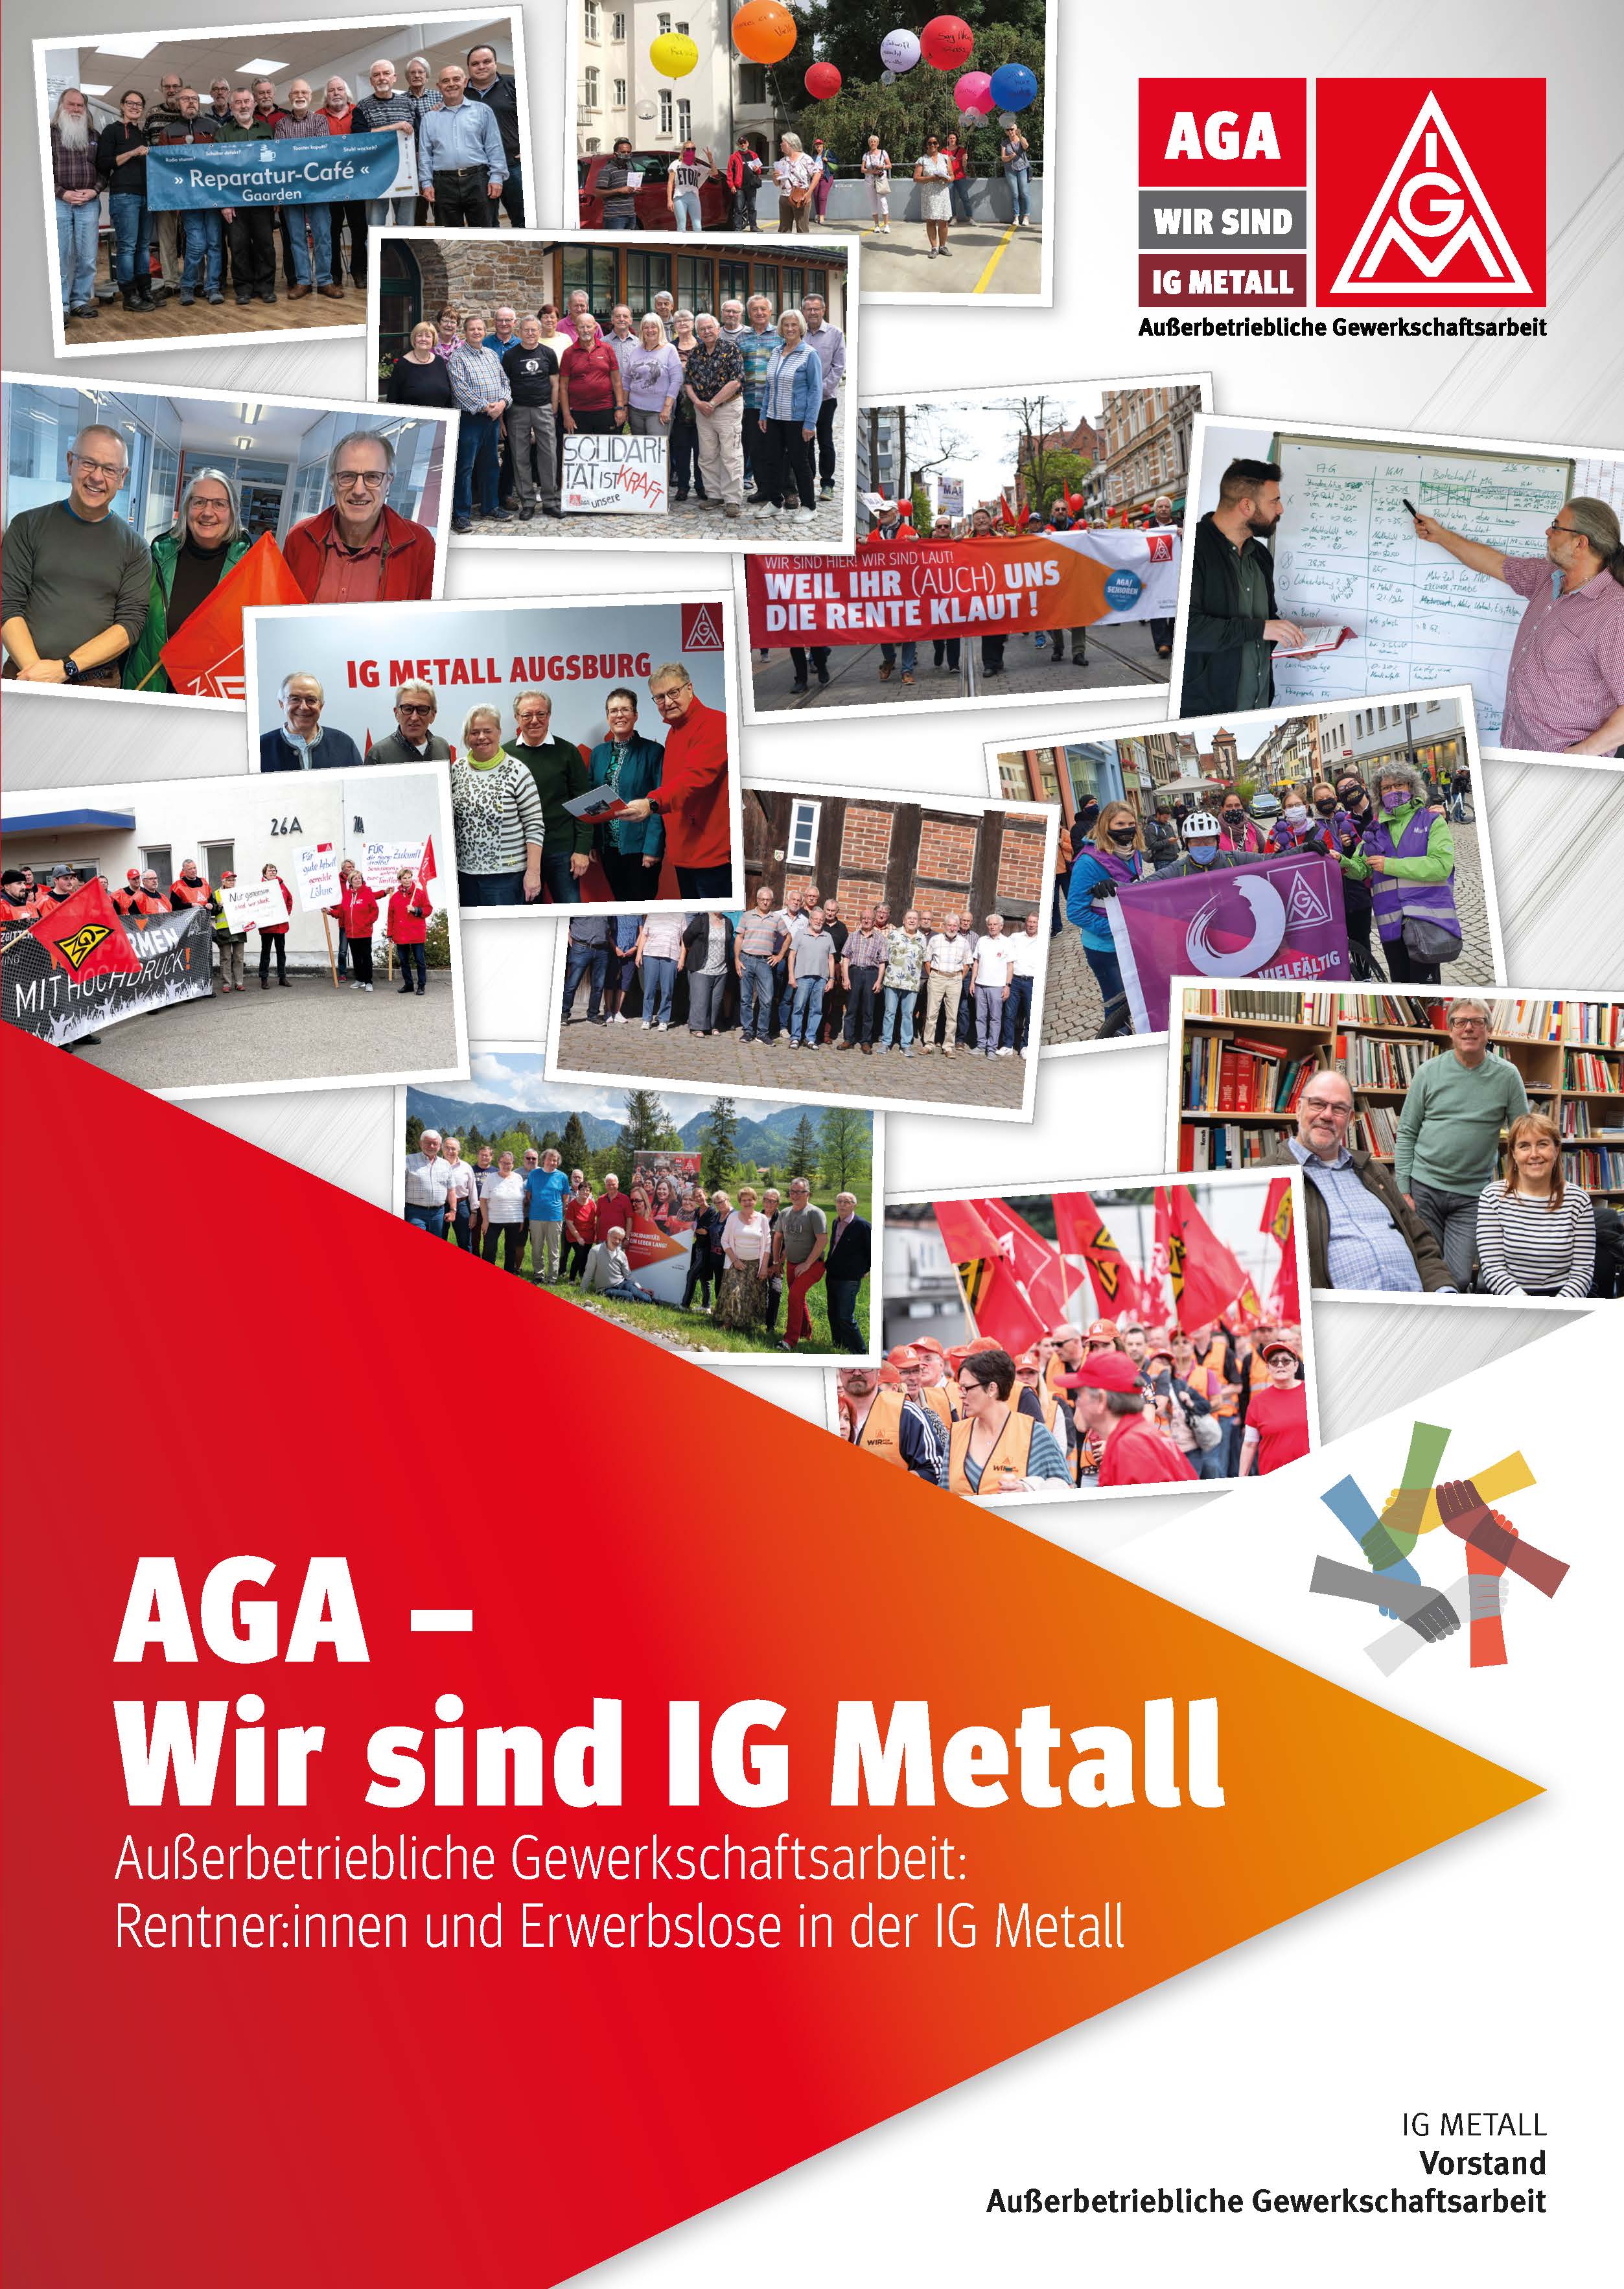 AGA-Imagebroschüre, IG Metall AGA-Broschüre